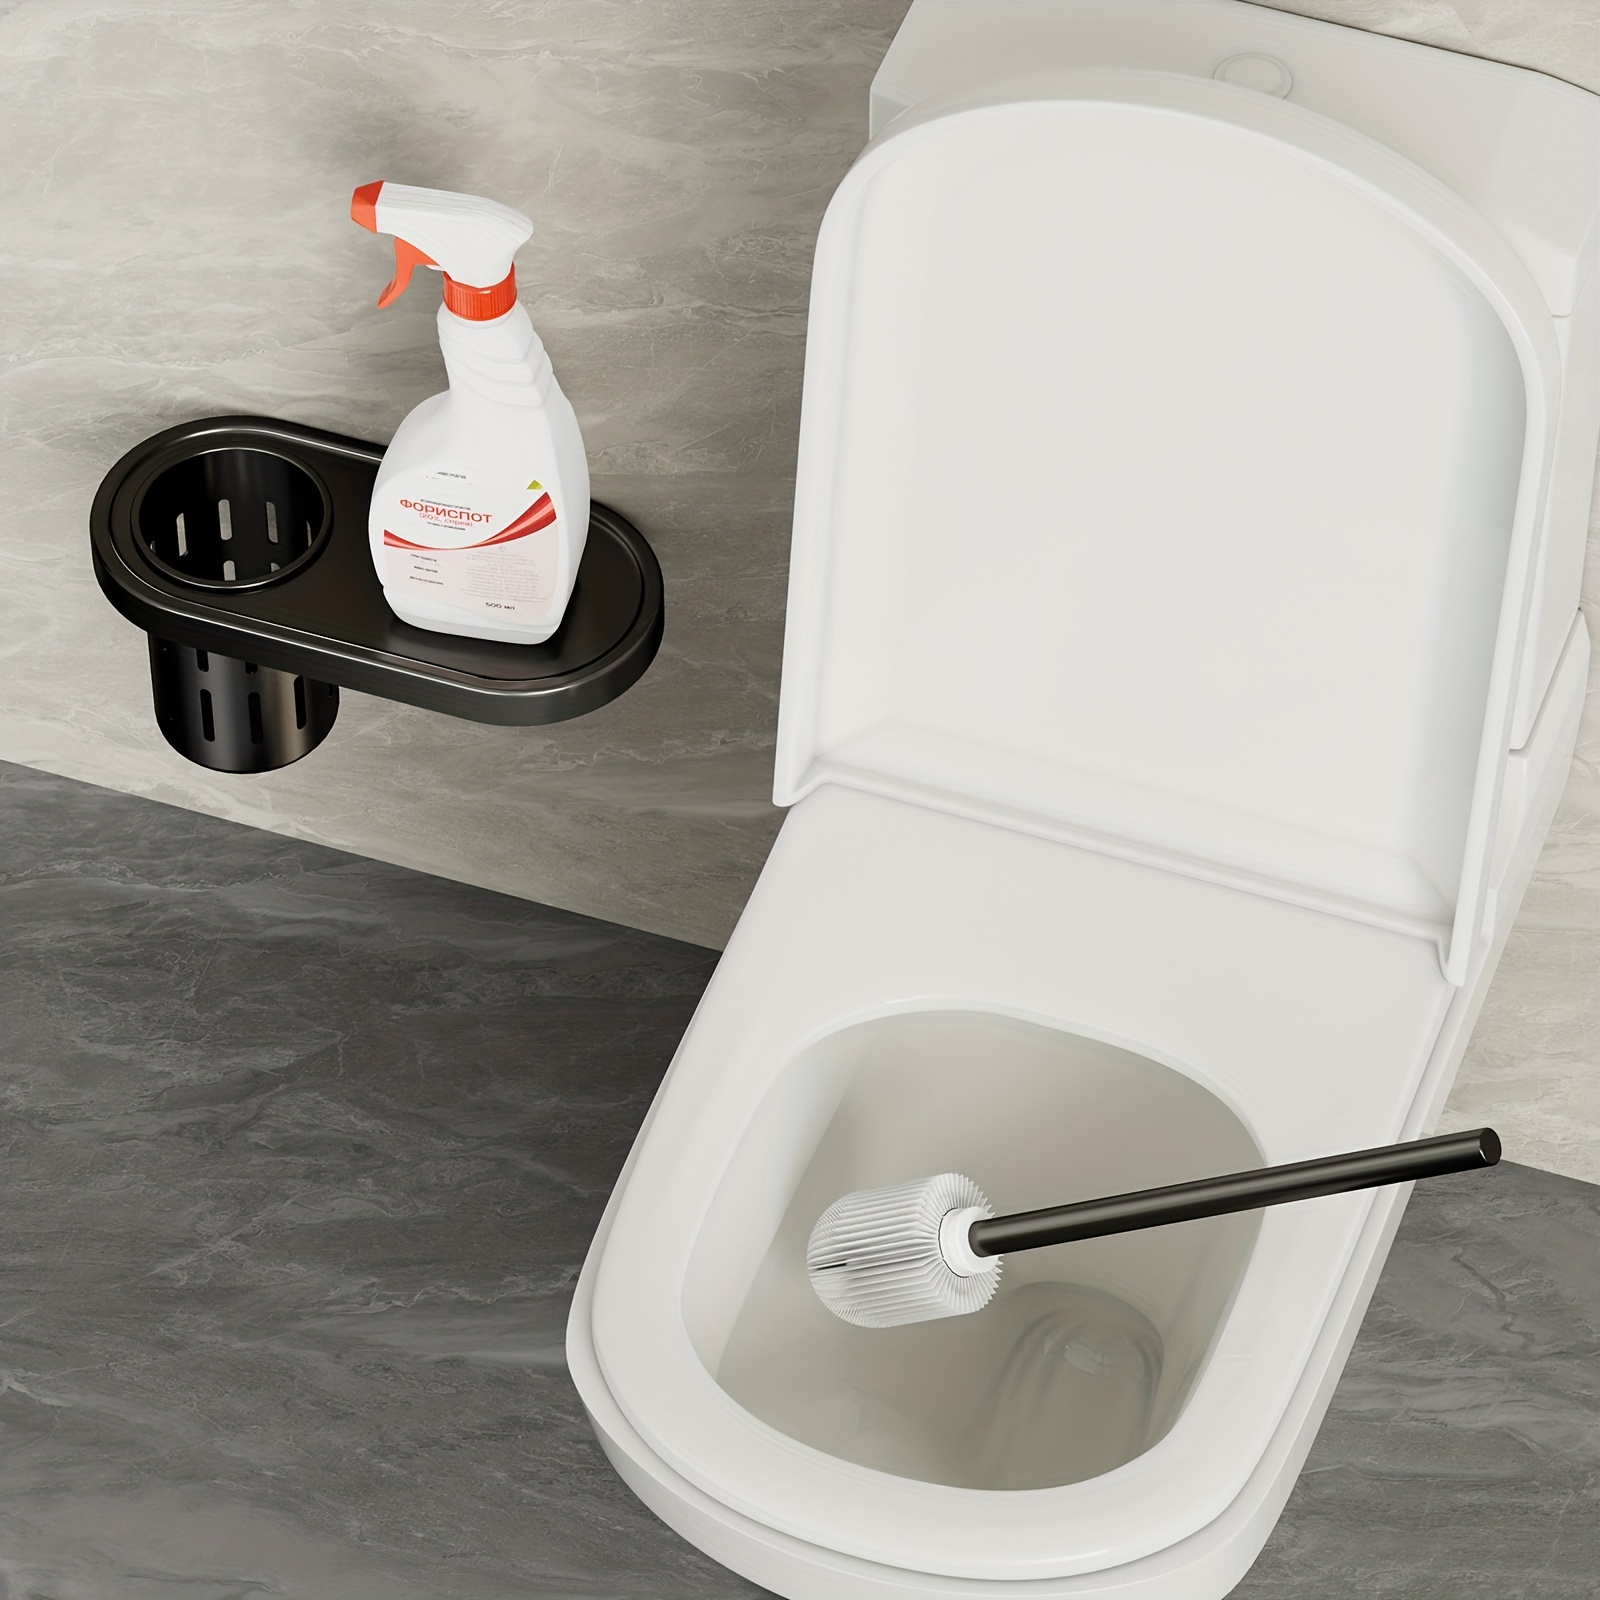 1pc No Dead Corner Toilet Brush Holder Set For Home Bathroom With